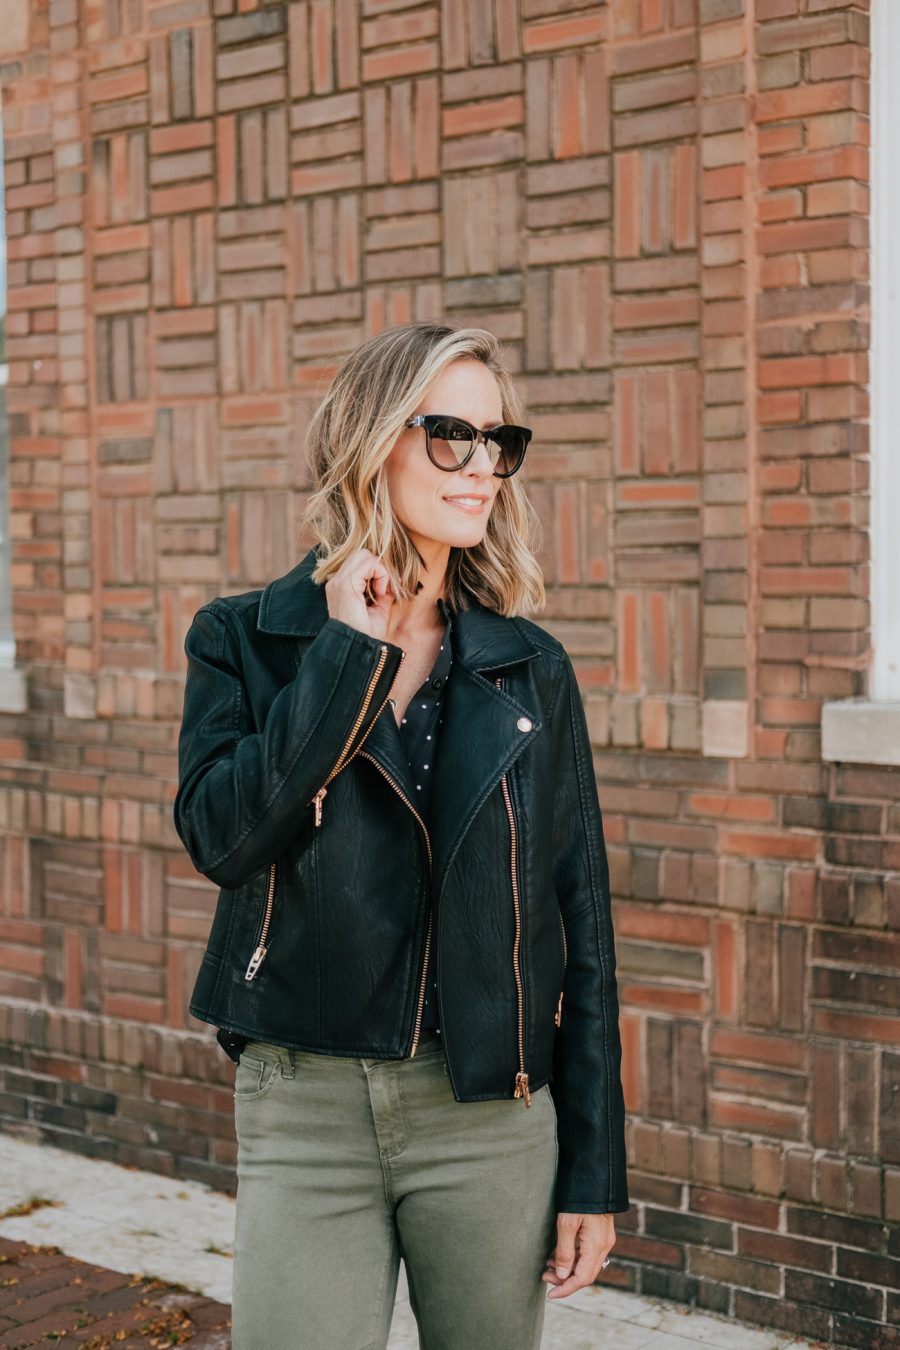 Budget friendly style: olive pants, polka dot blouse, moto jacket, and sunglasses